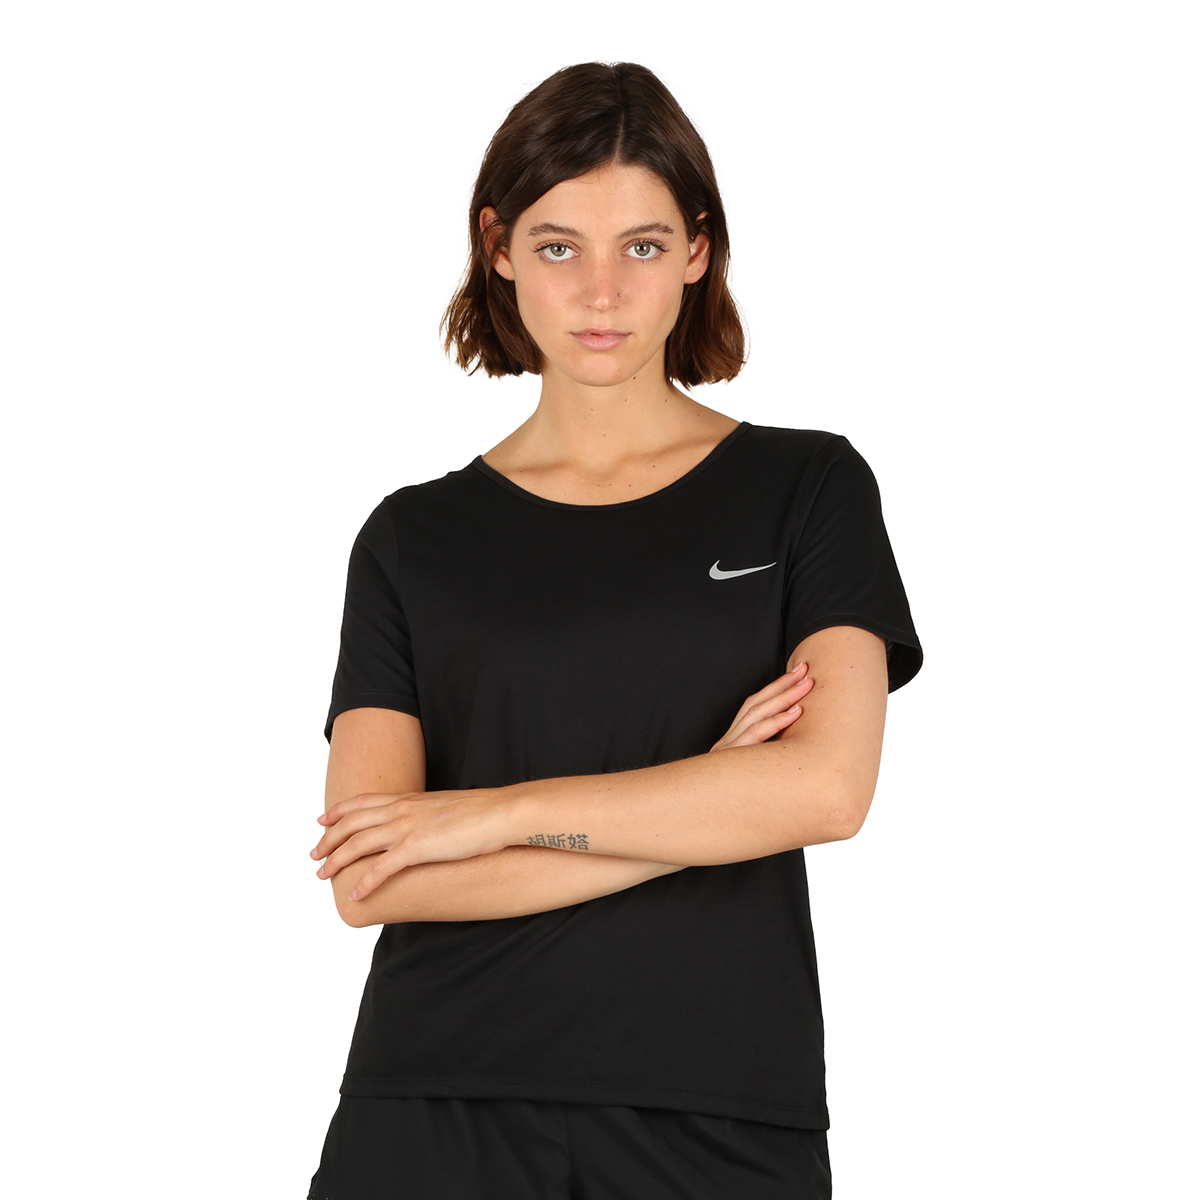 Remera Nike Drifit Run Division,  image number null